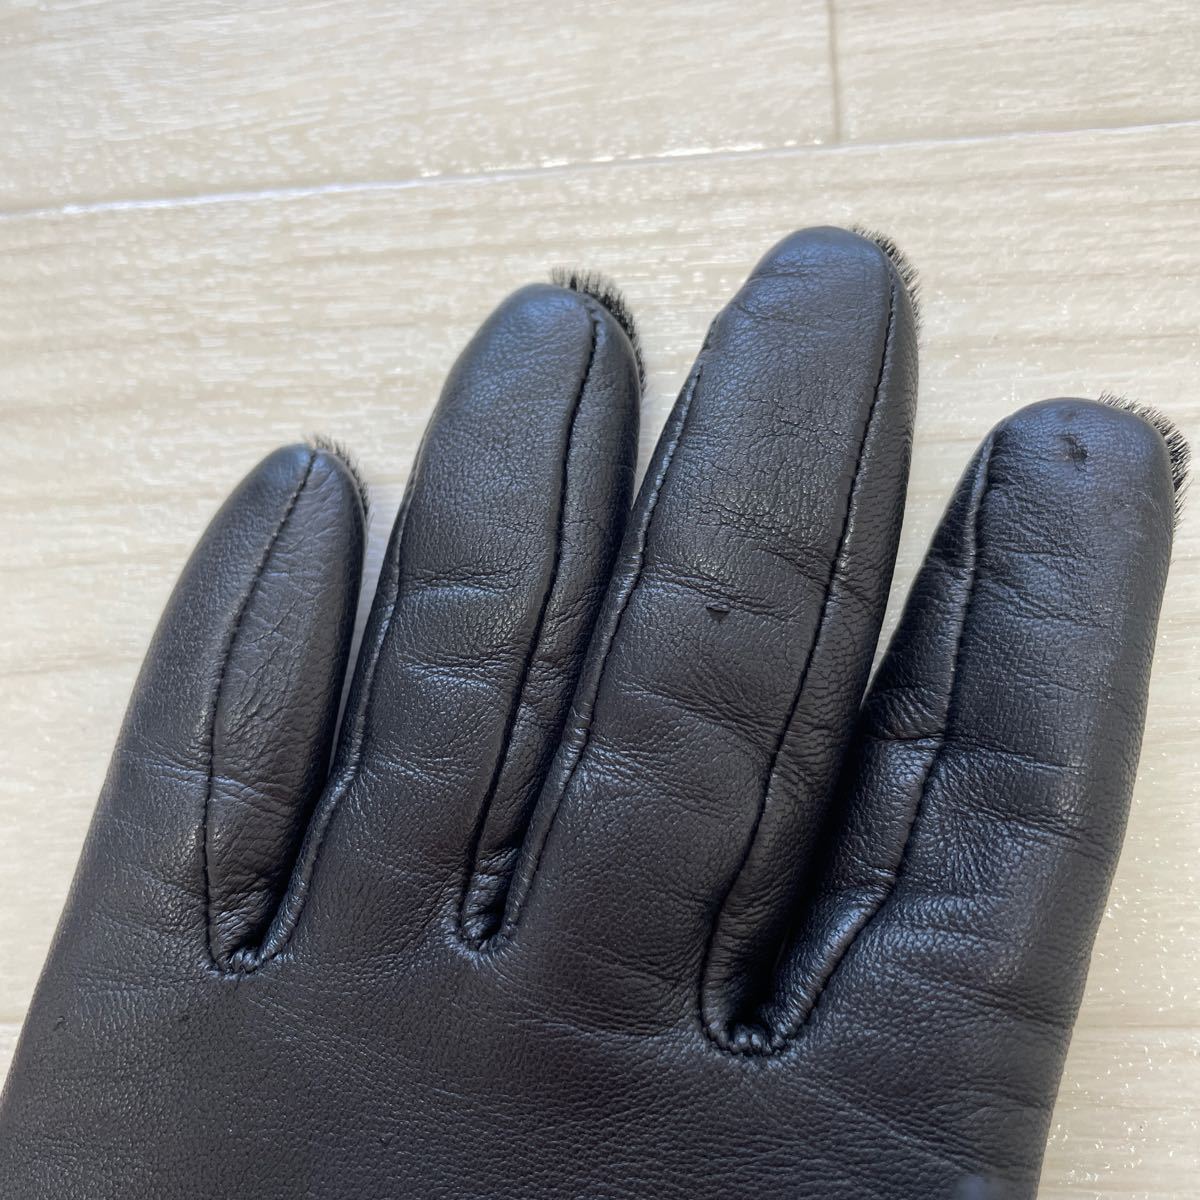 AGNELLEani.ru leather glove is lako long gloves black black size 7